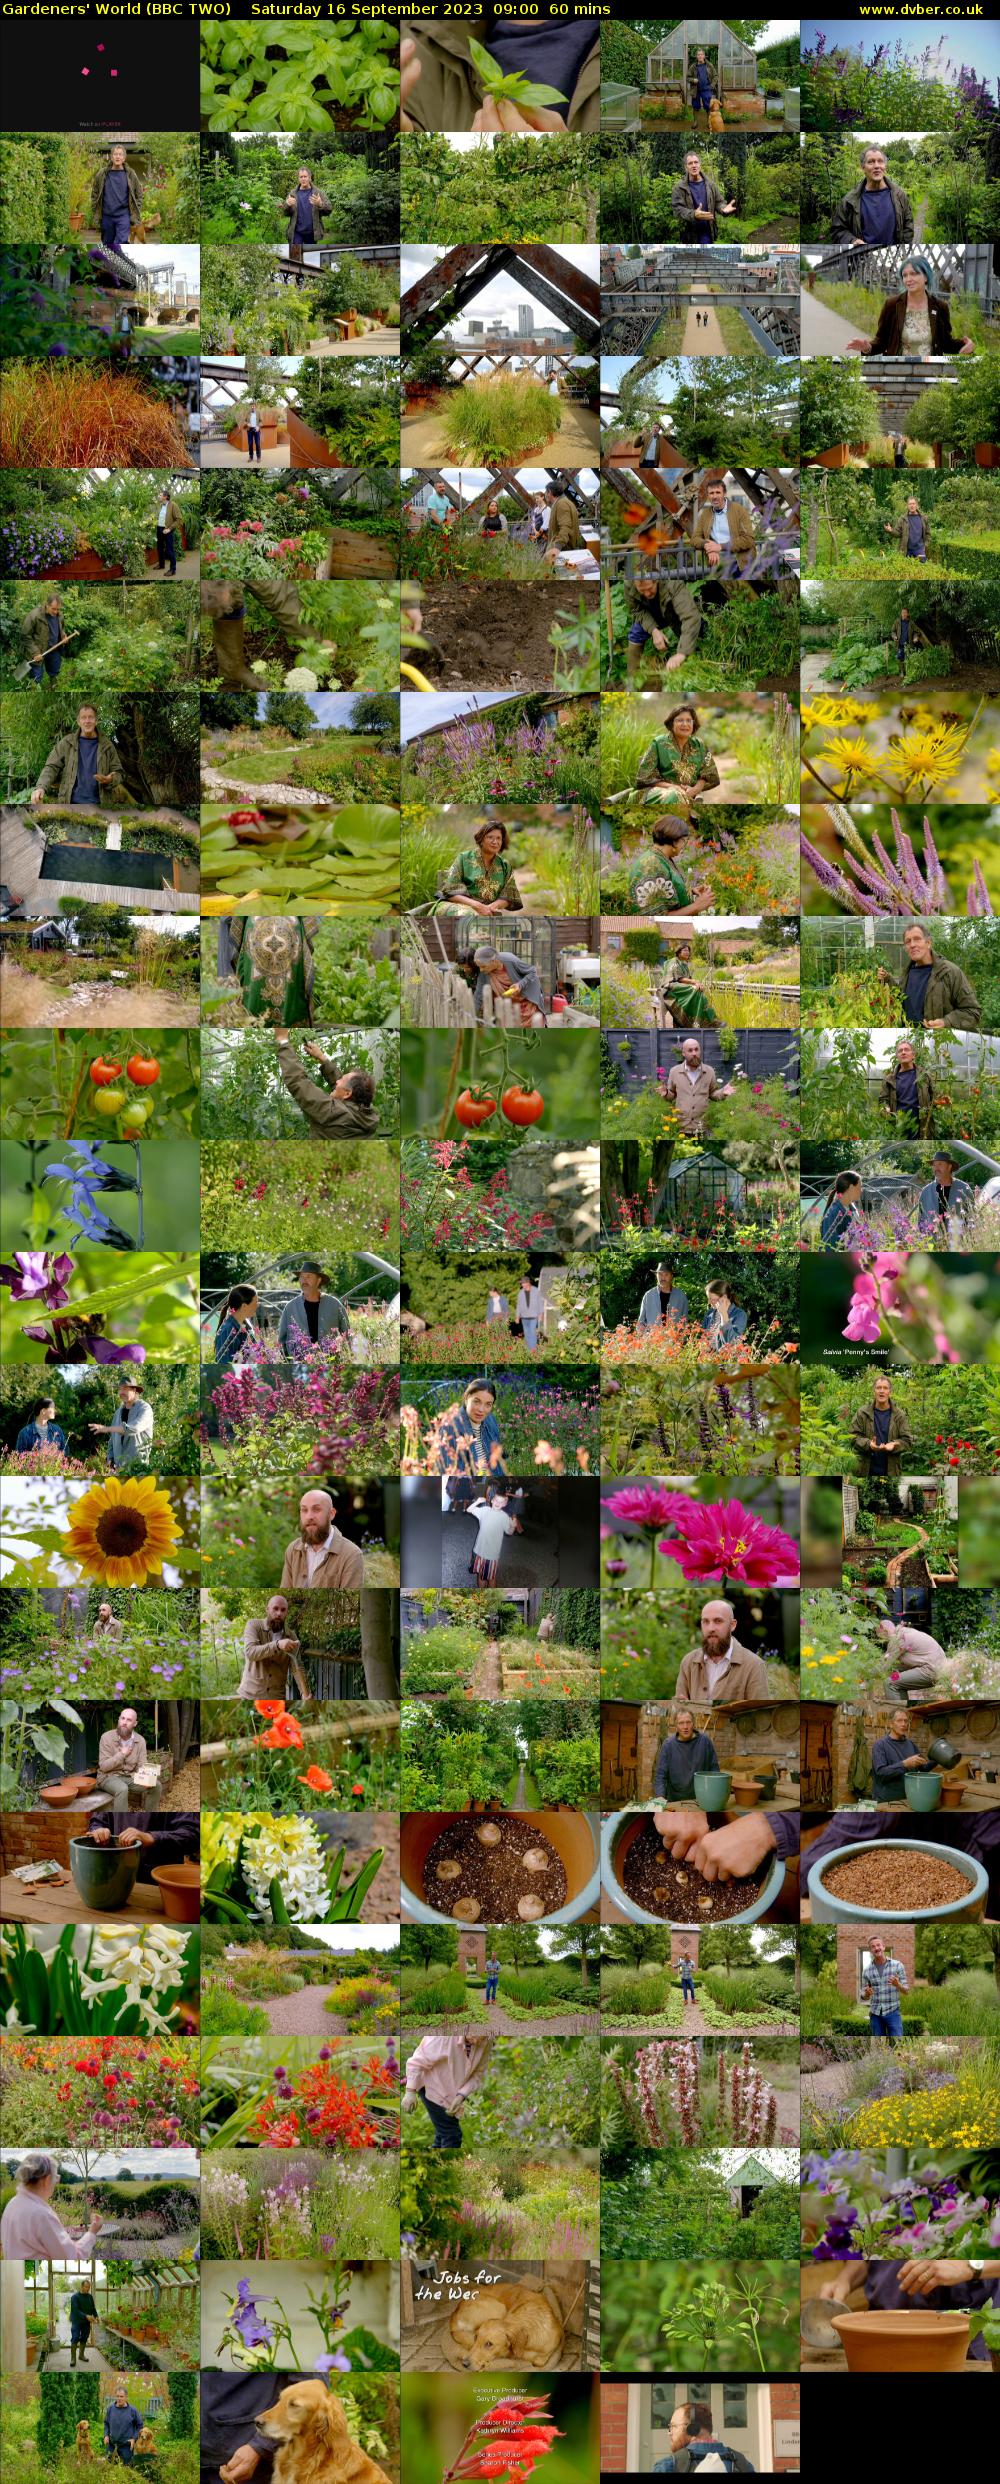 Gardeners' World (BBC TWO) Saturday 16 September 2023 09:00 - 10:00